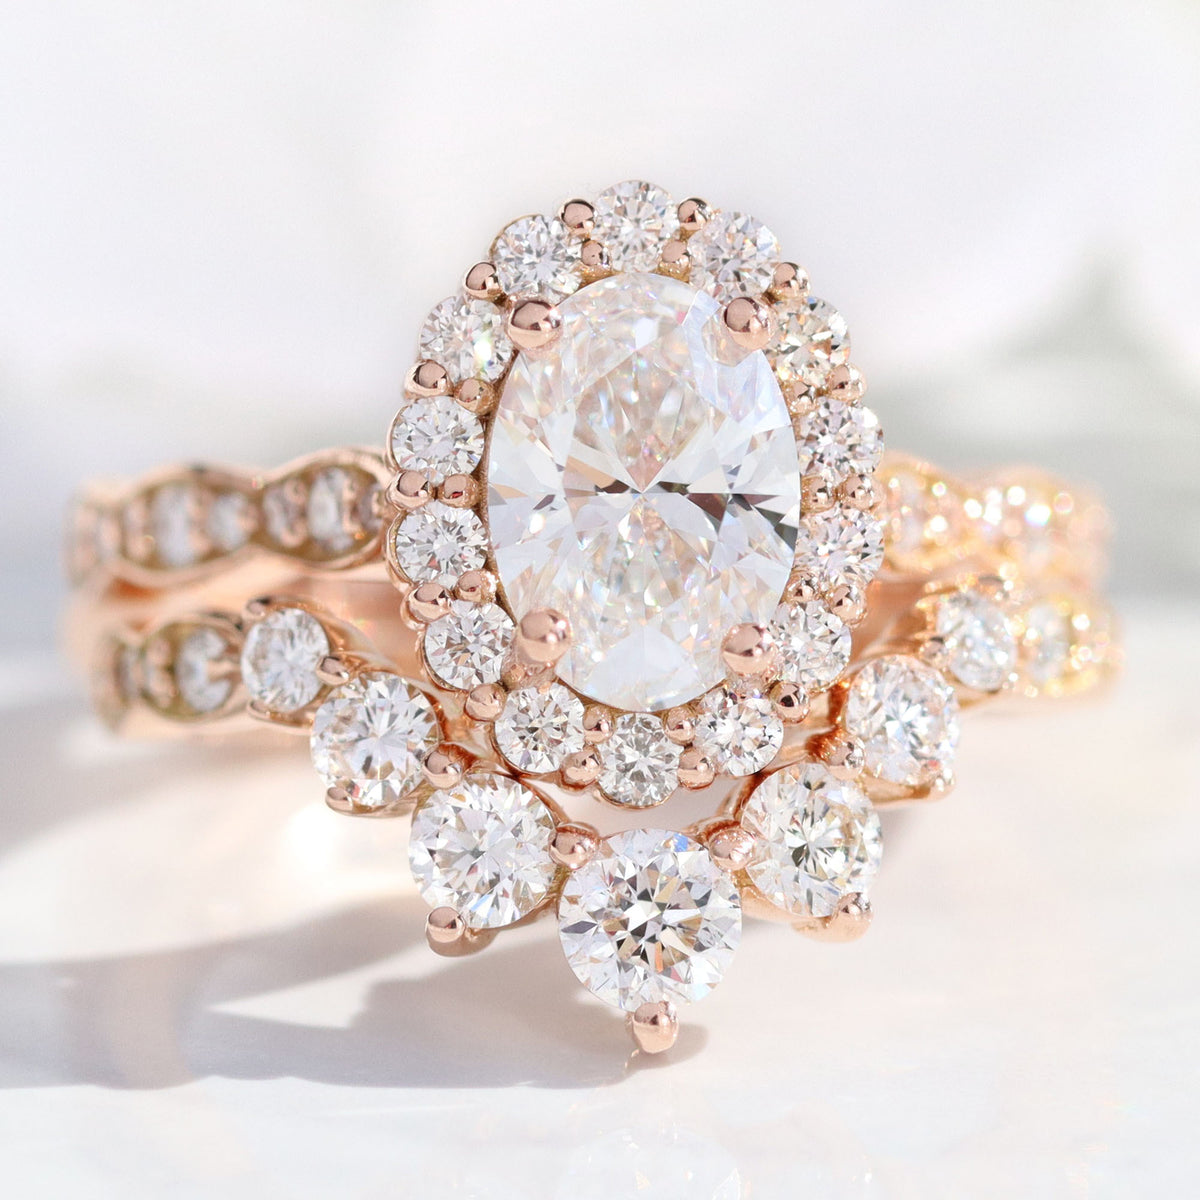 lab diamond ring stack rose gold halo diamond engagement ring set La More Design Jewelry